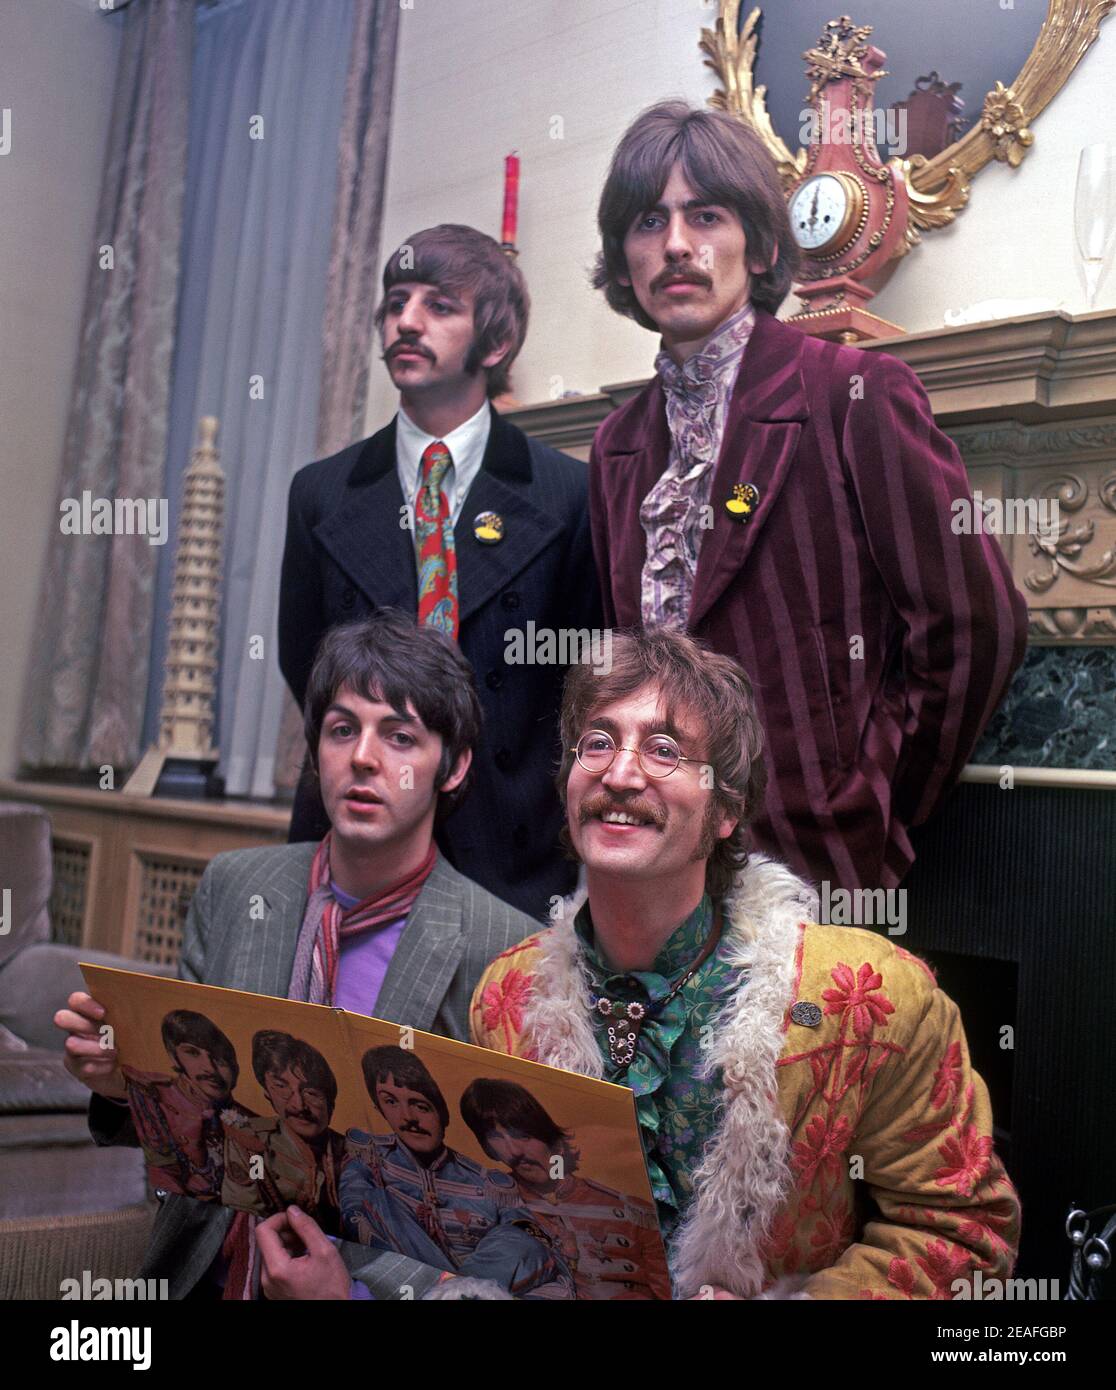 DIE BEATLES beim Start von Sgt. Pepper's Lonely Hearts Club Band Aufnahme in den Apple Büros in Saville Row im Mai 1967. Von links: Paul McCartney, Ringo Starr, John Lennon, George Harrison. Foto: Tony Gale Stockfoto